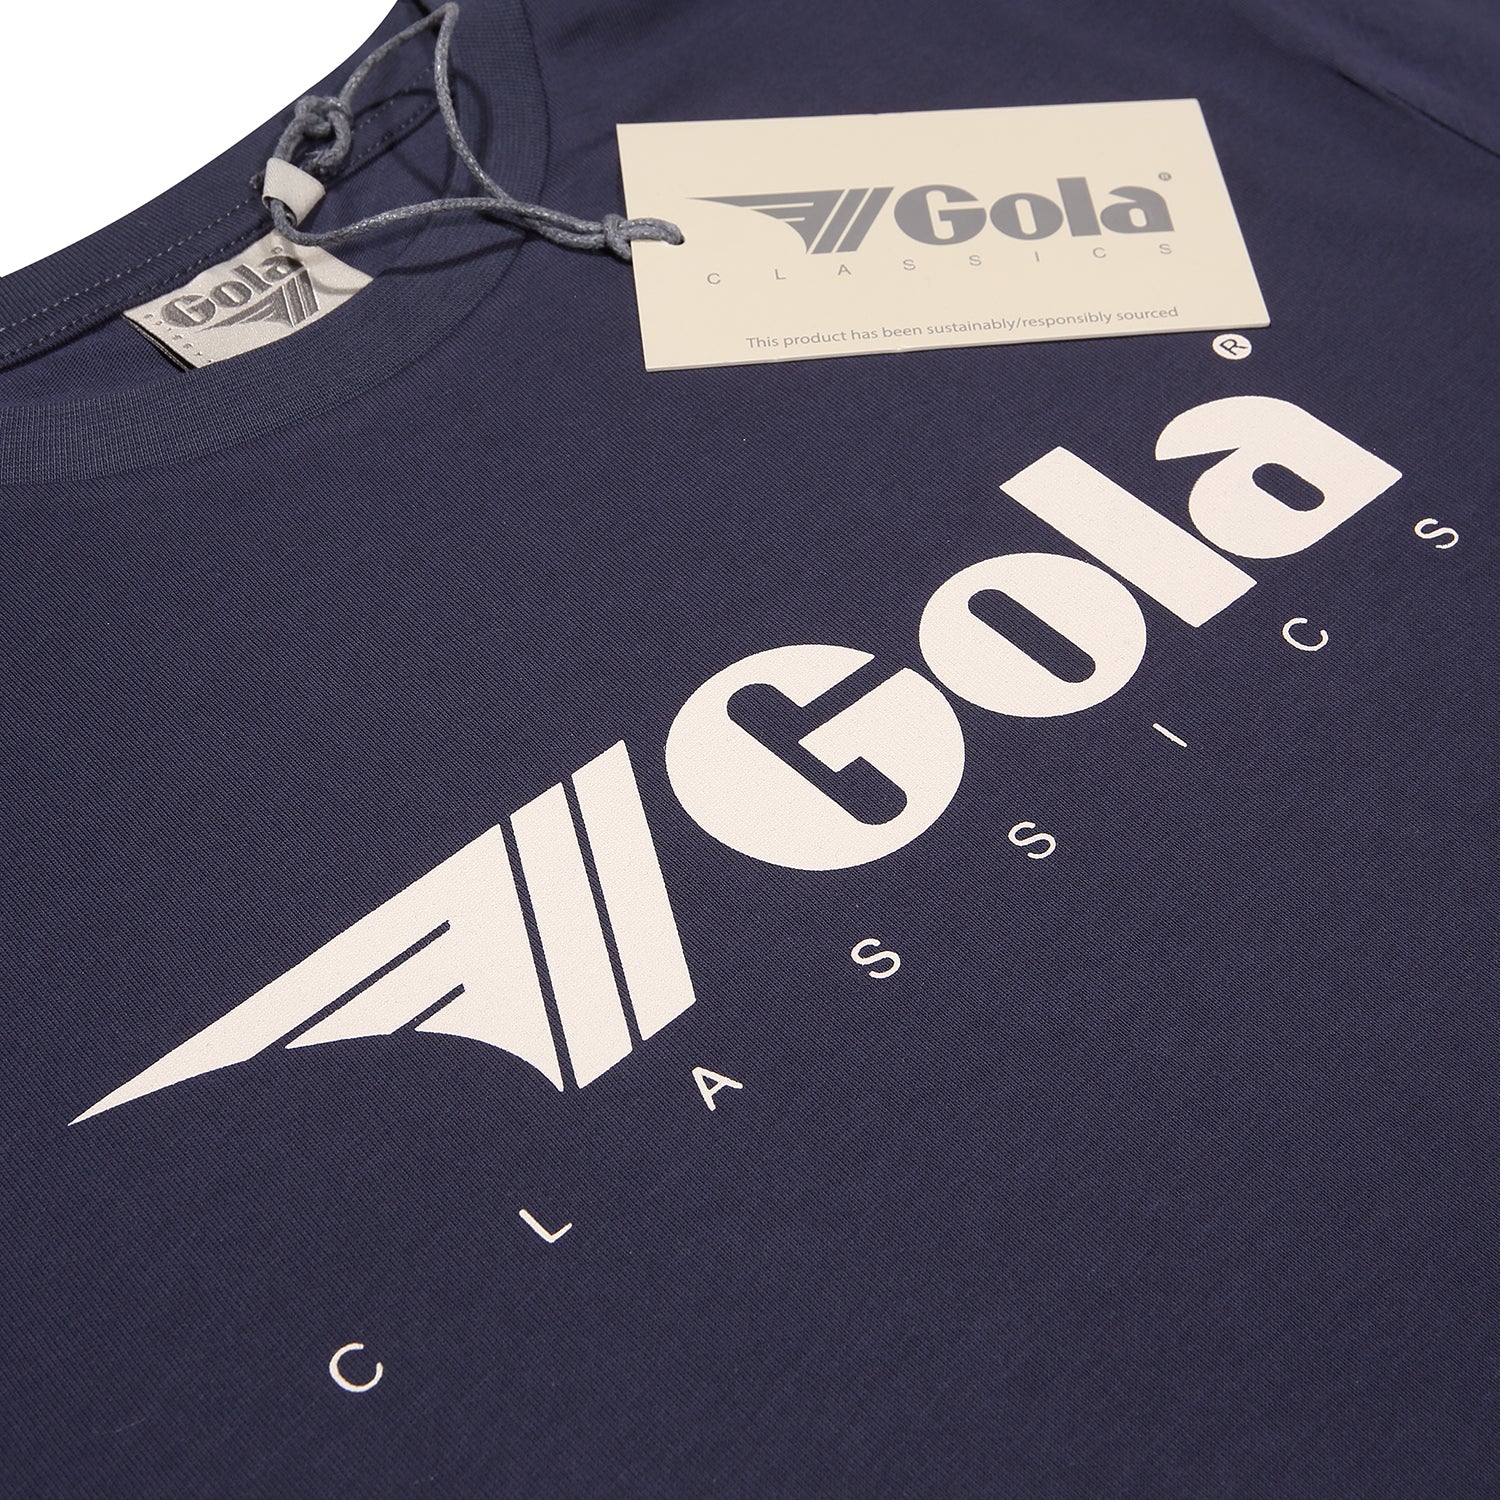 Gola Classics Printed Logo Tee Navy - Raw Menswear